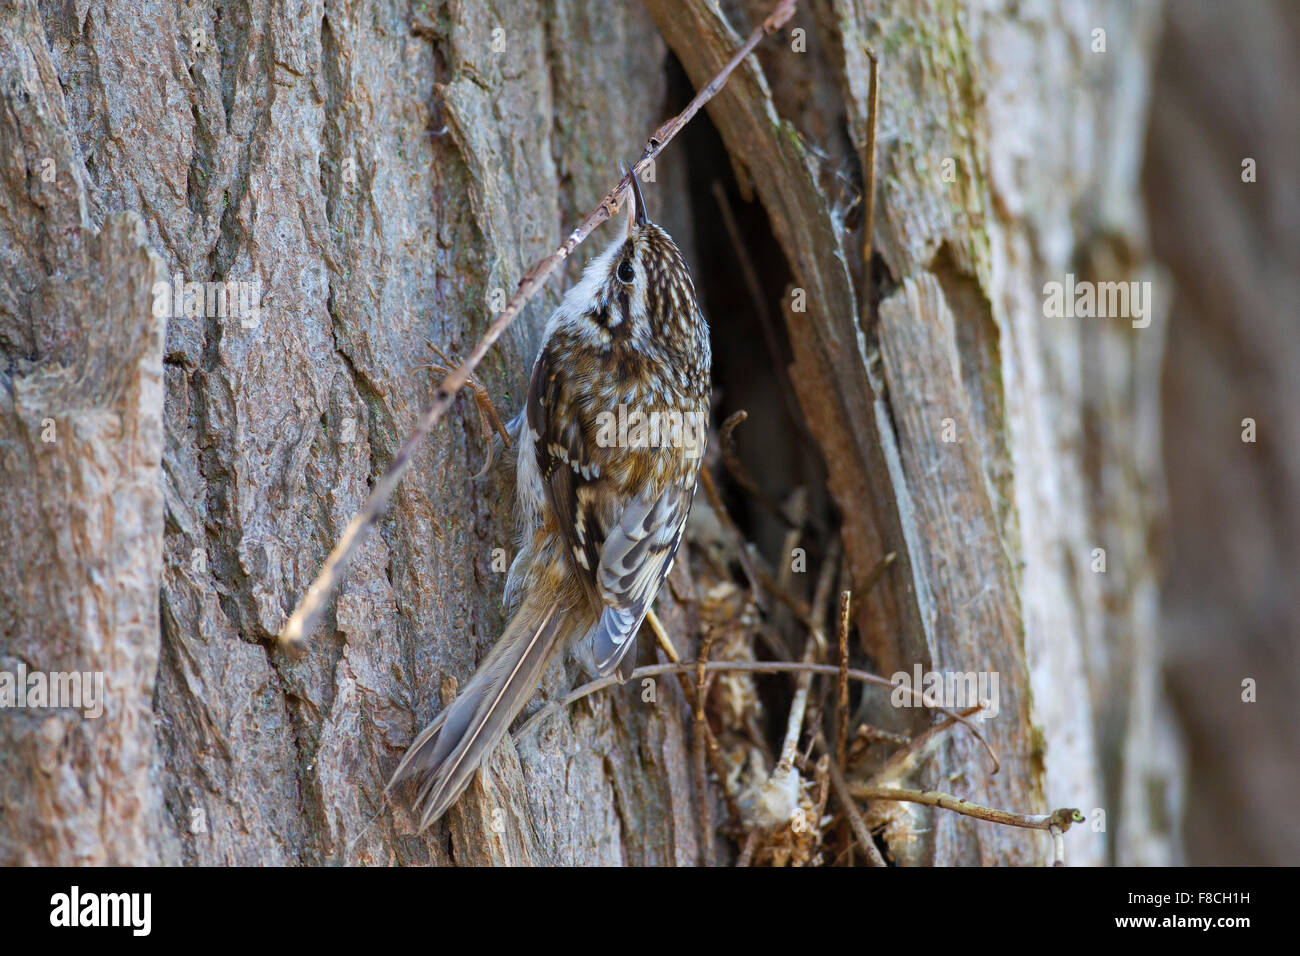 Eurasian treecreeper / common treecreeper (Certhia familiaris) climbing tree trunk with twig as nesting material in beak Stock Photo